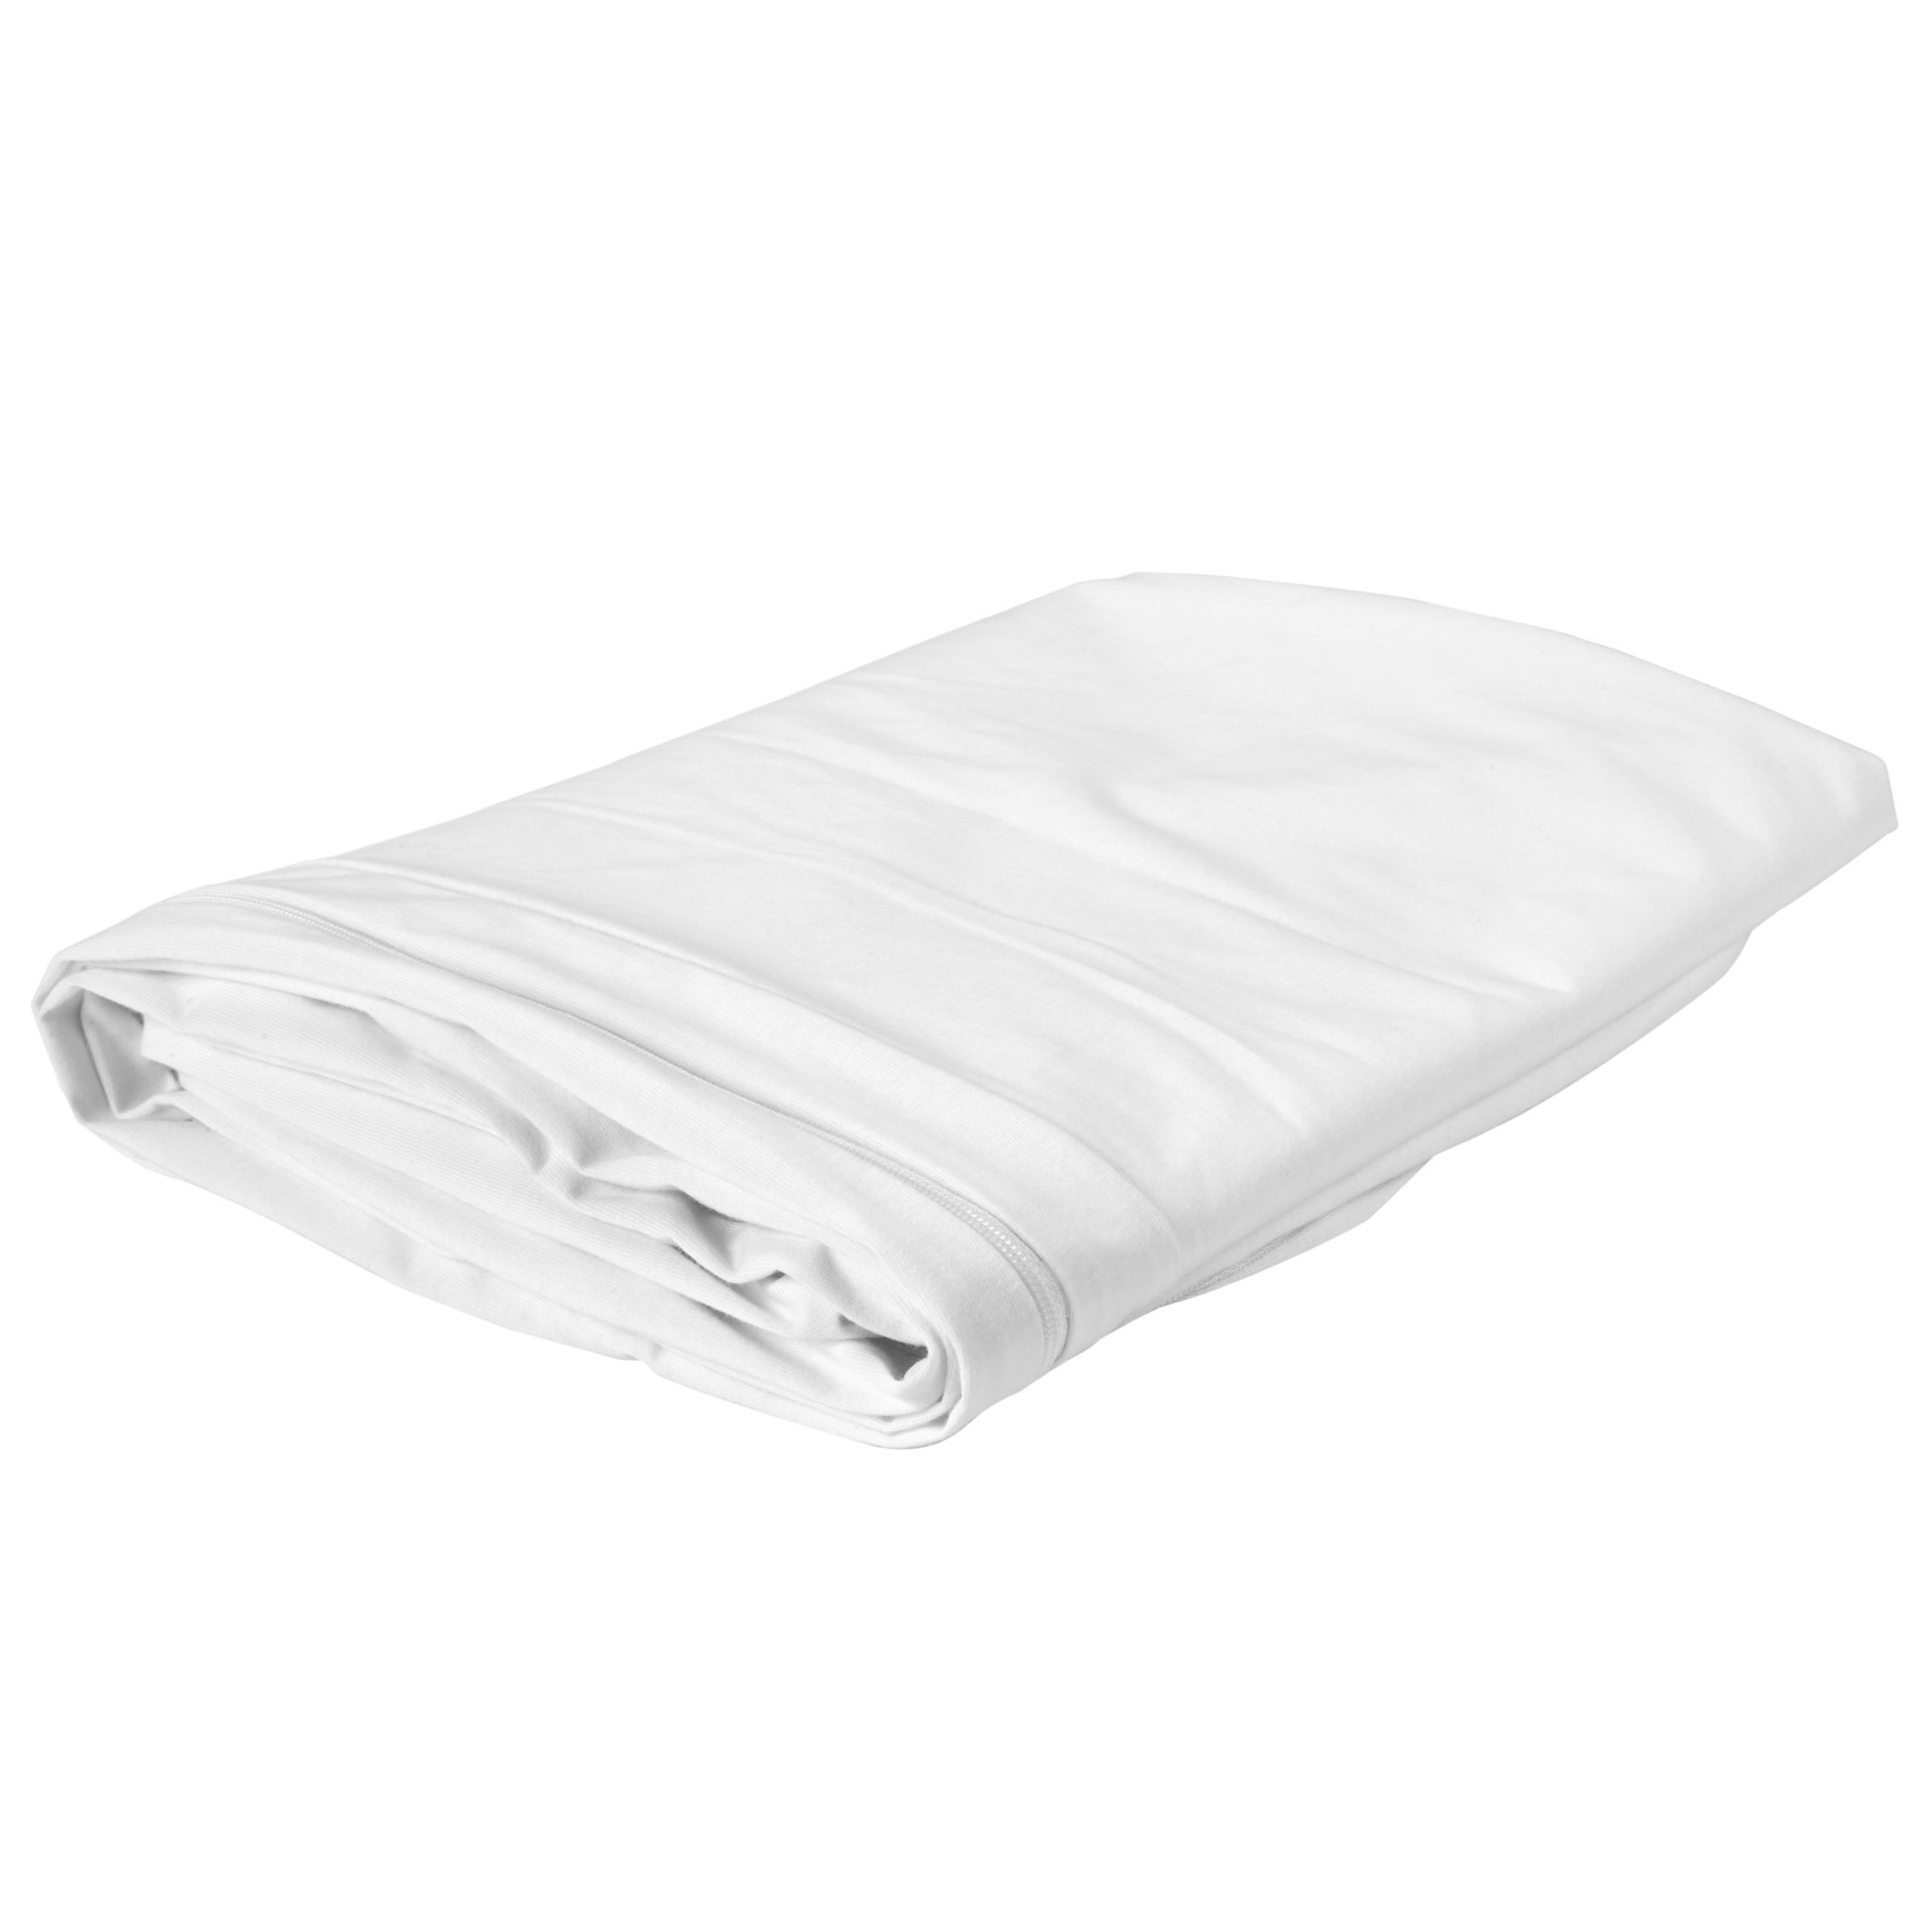 waterproof cot mattress protector